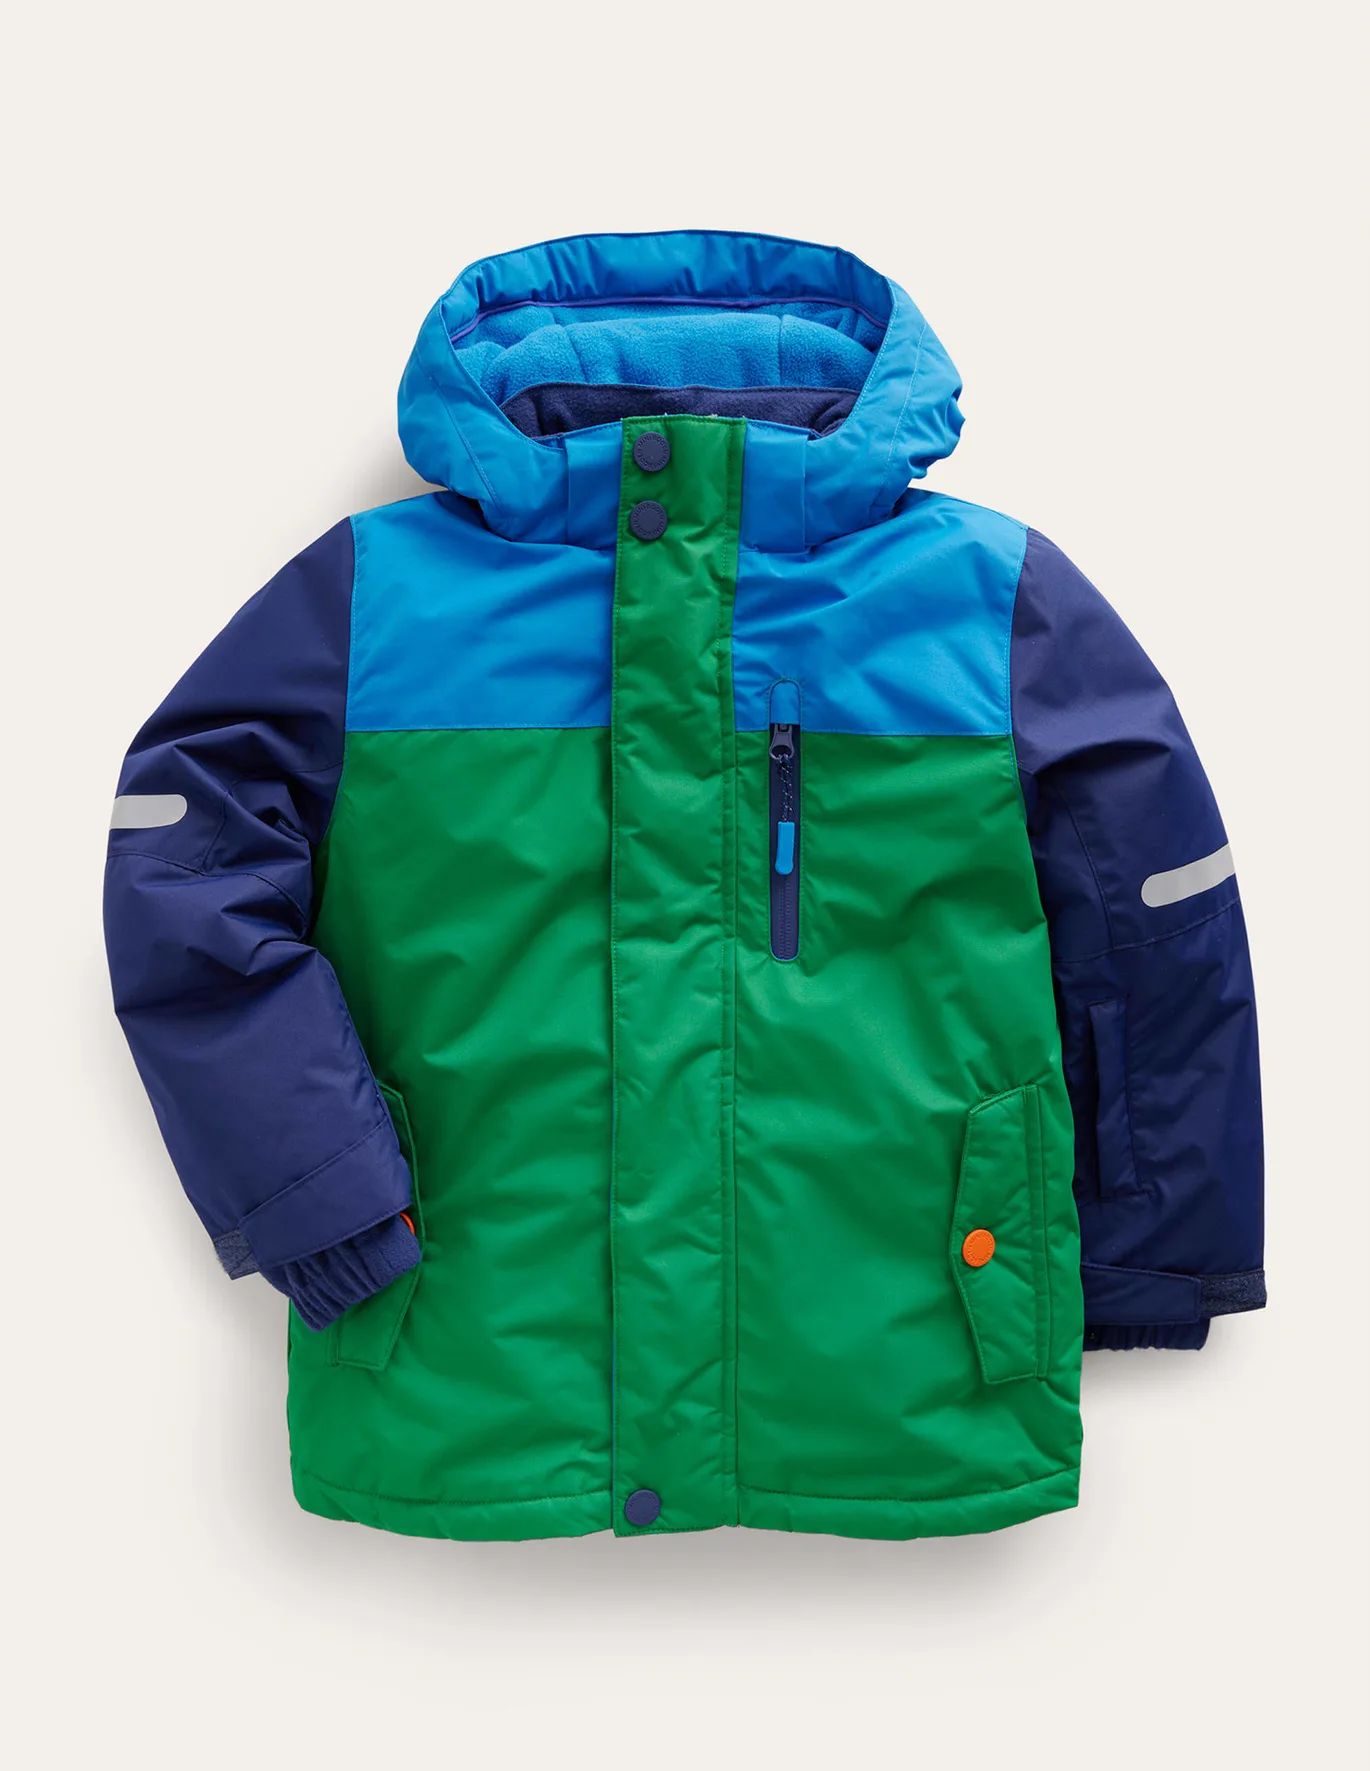 All-weather Waterproof Jacket | Boden (US)